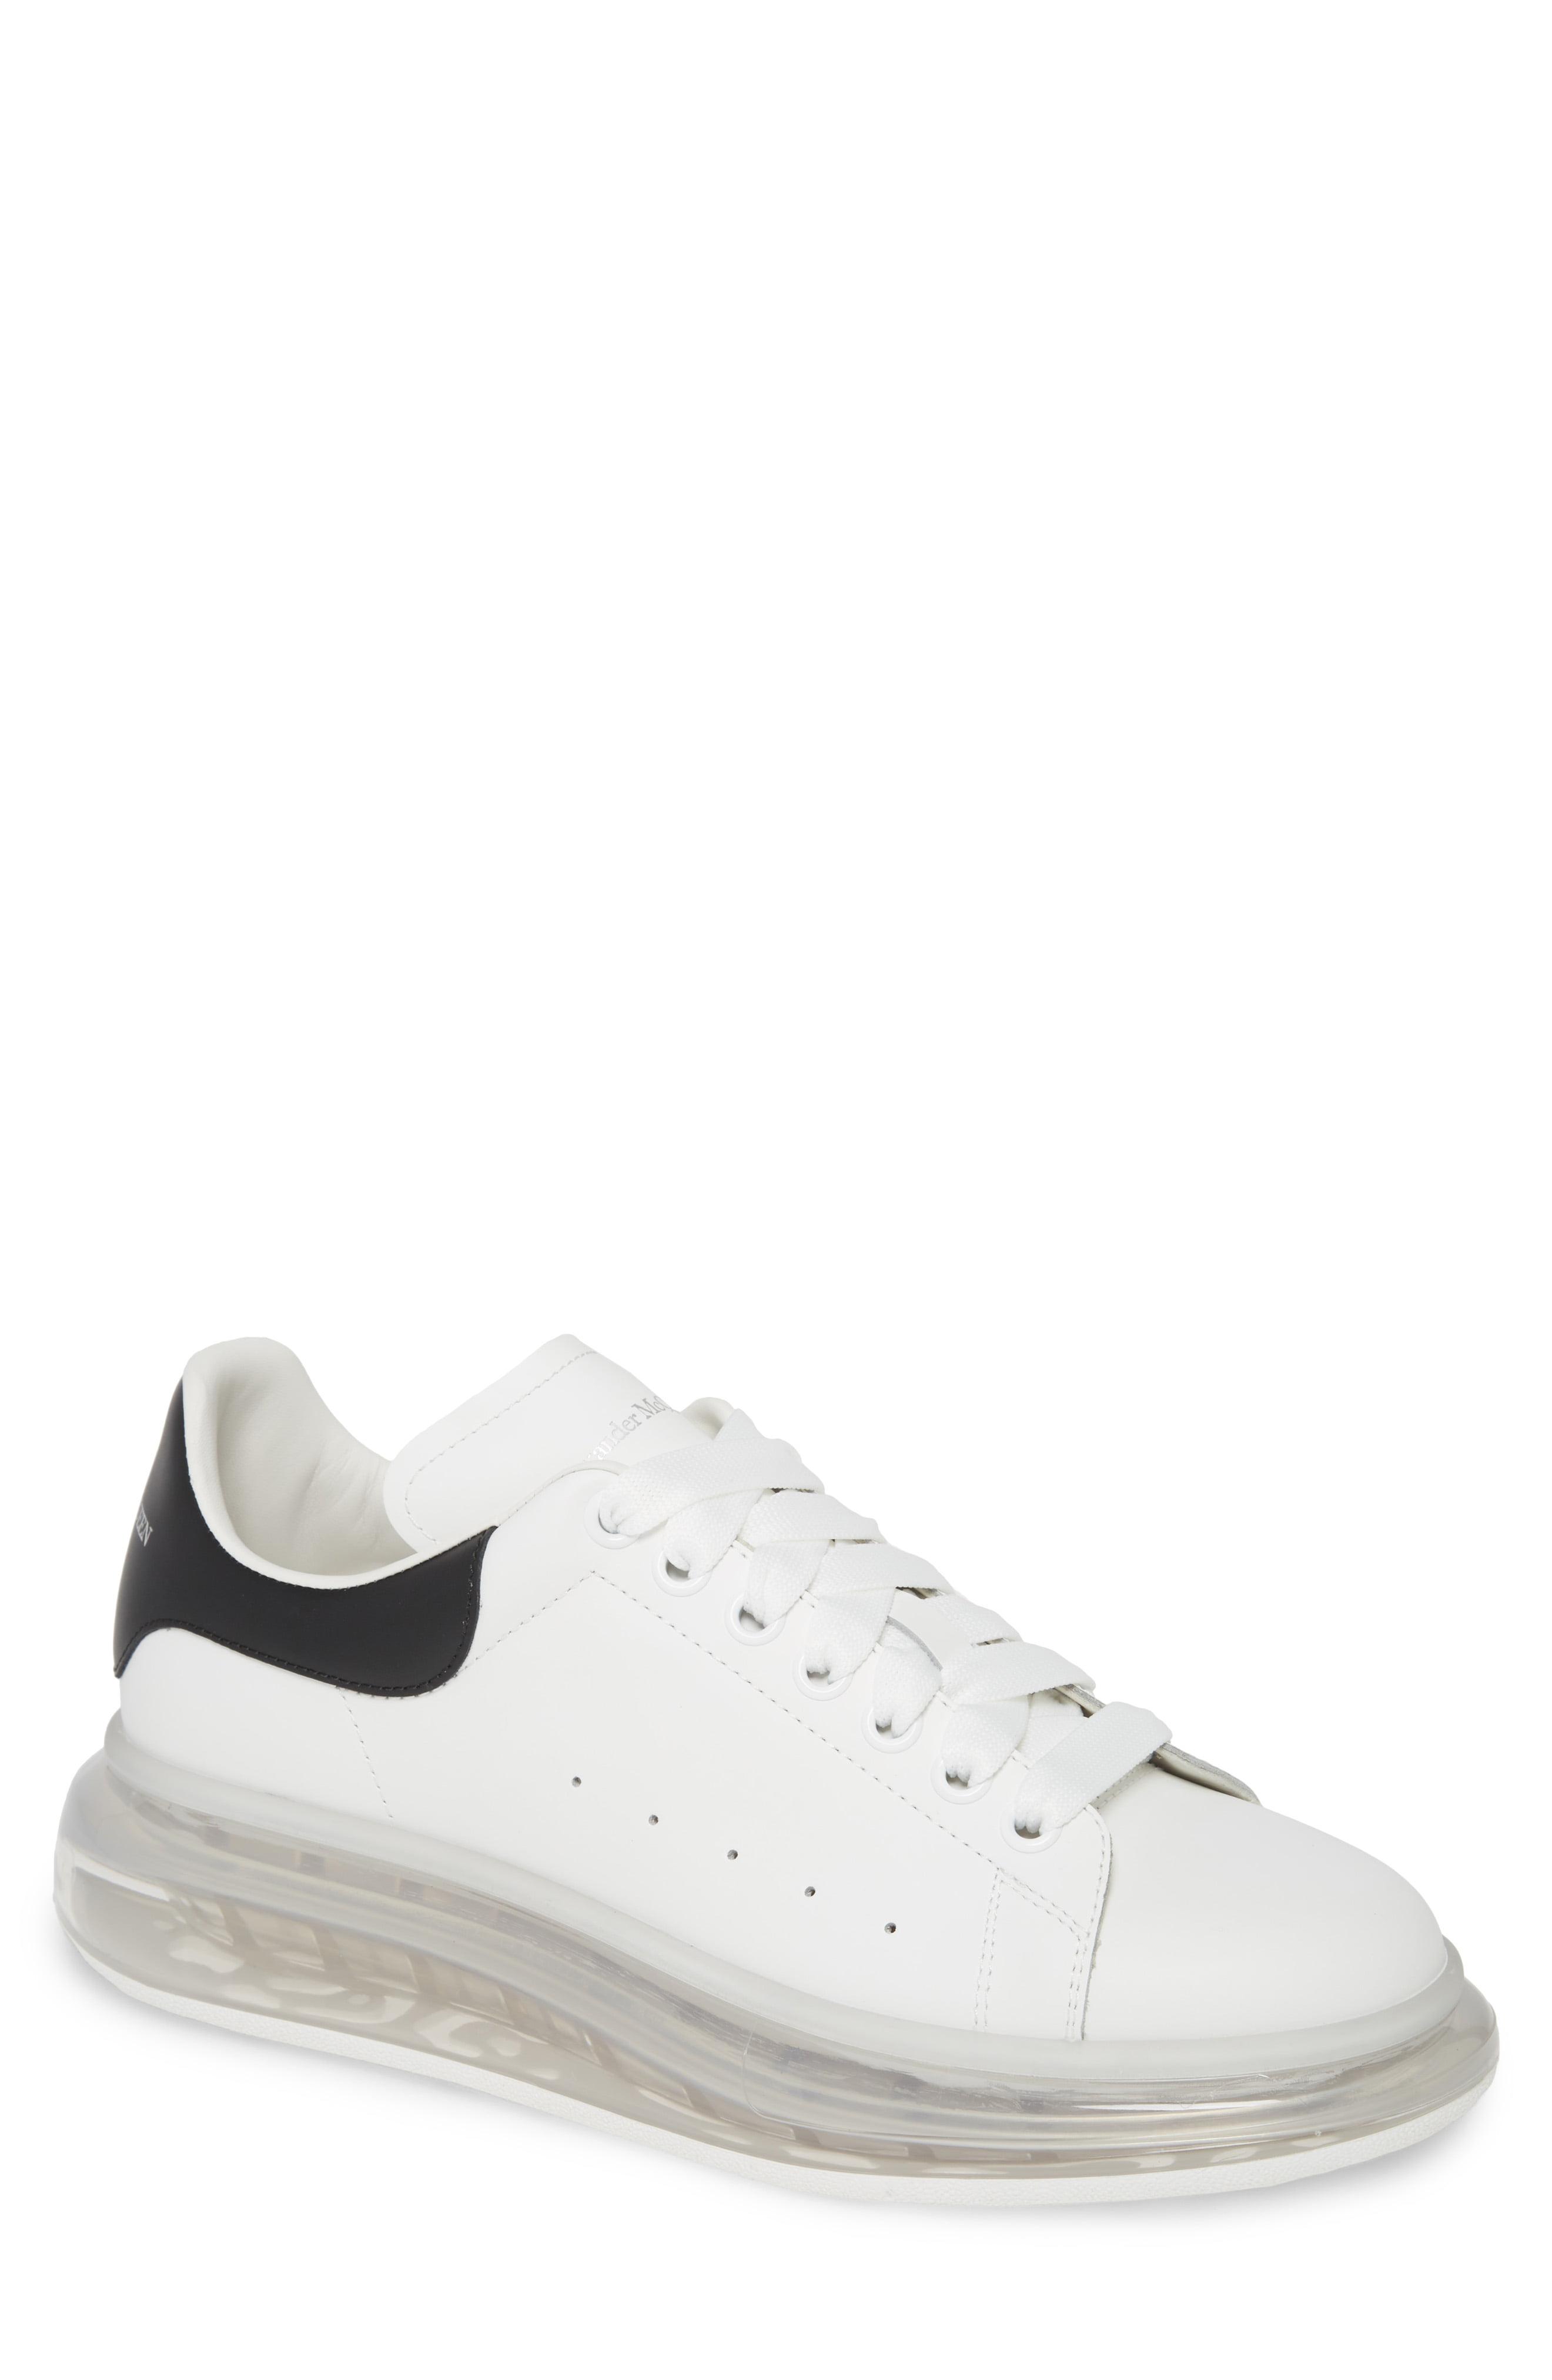 Alexander McQueen Leather Oversize Low Top Sneaker in White/ Black ...